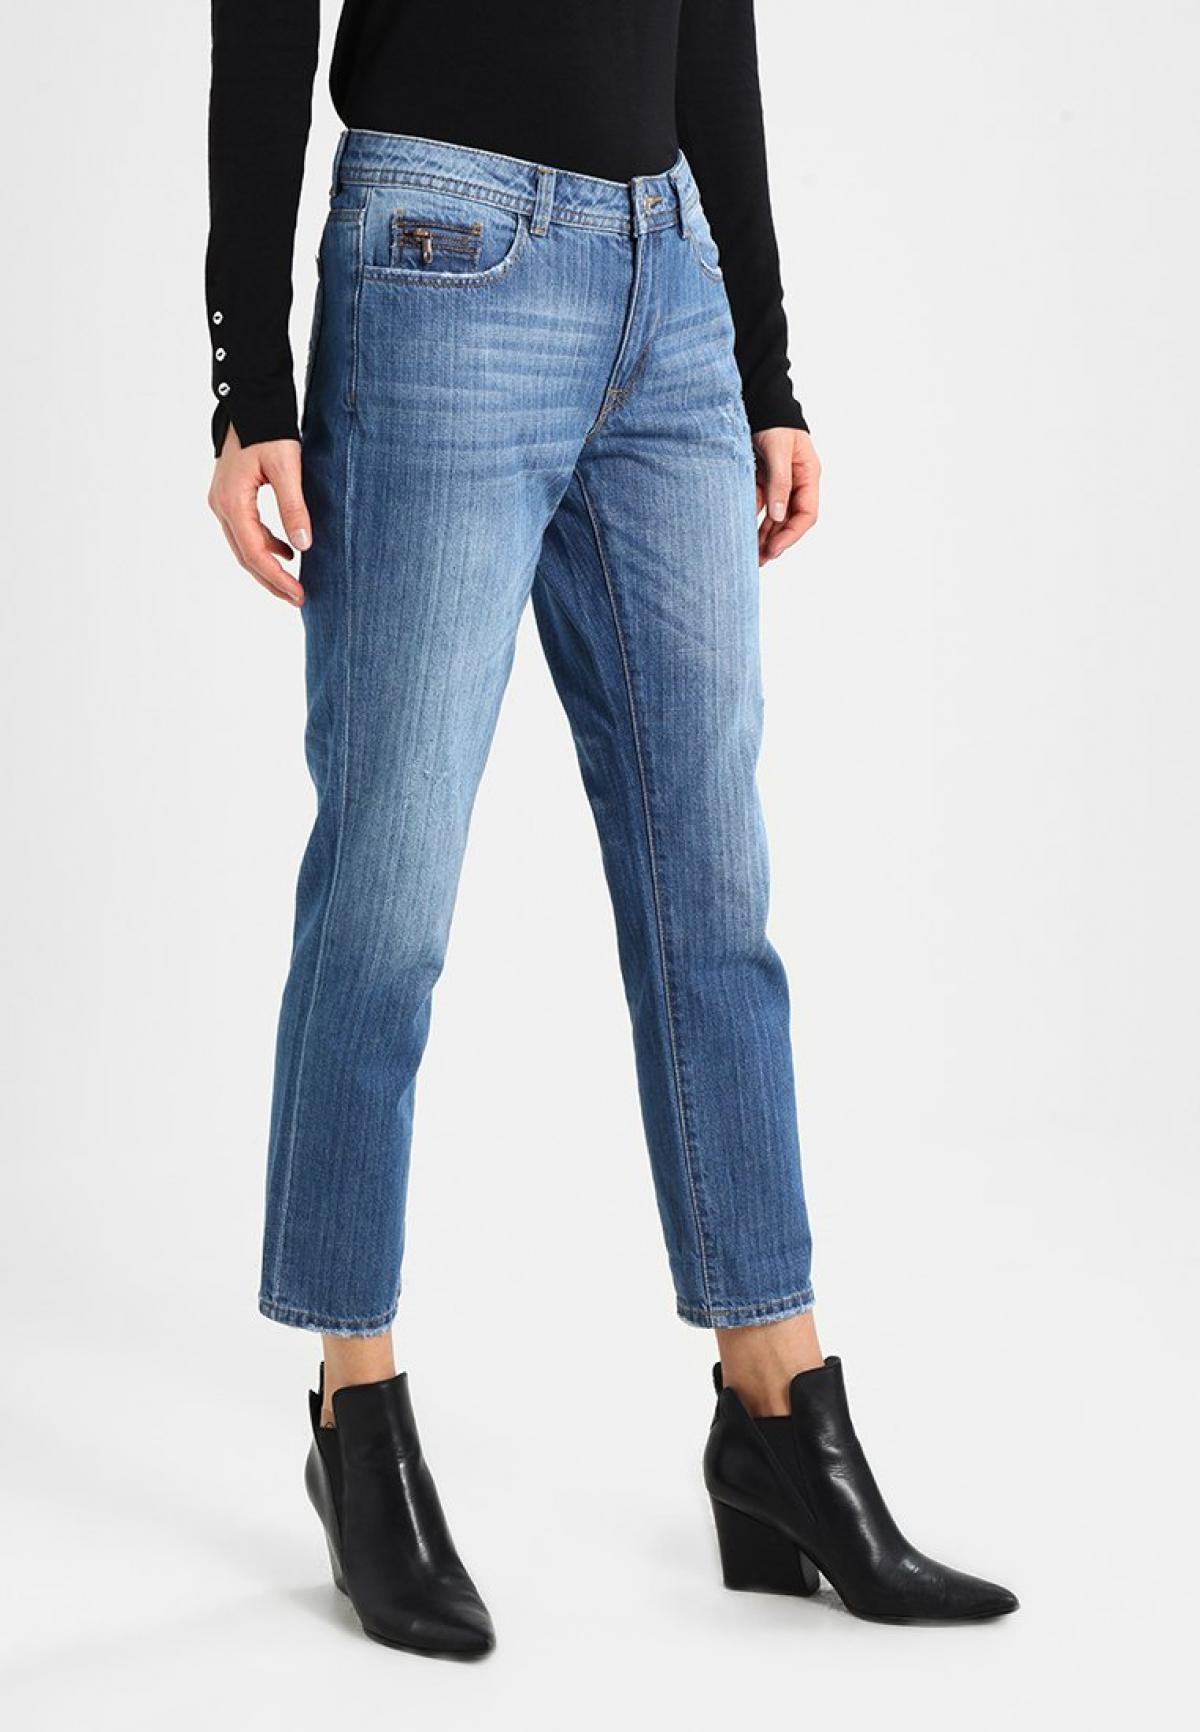 Straight leg jeans